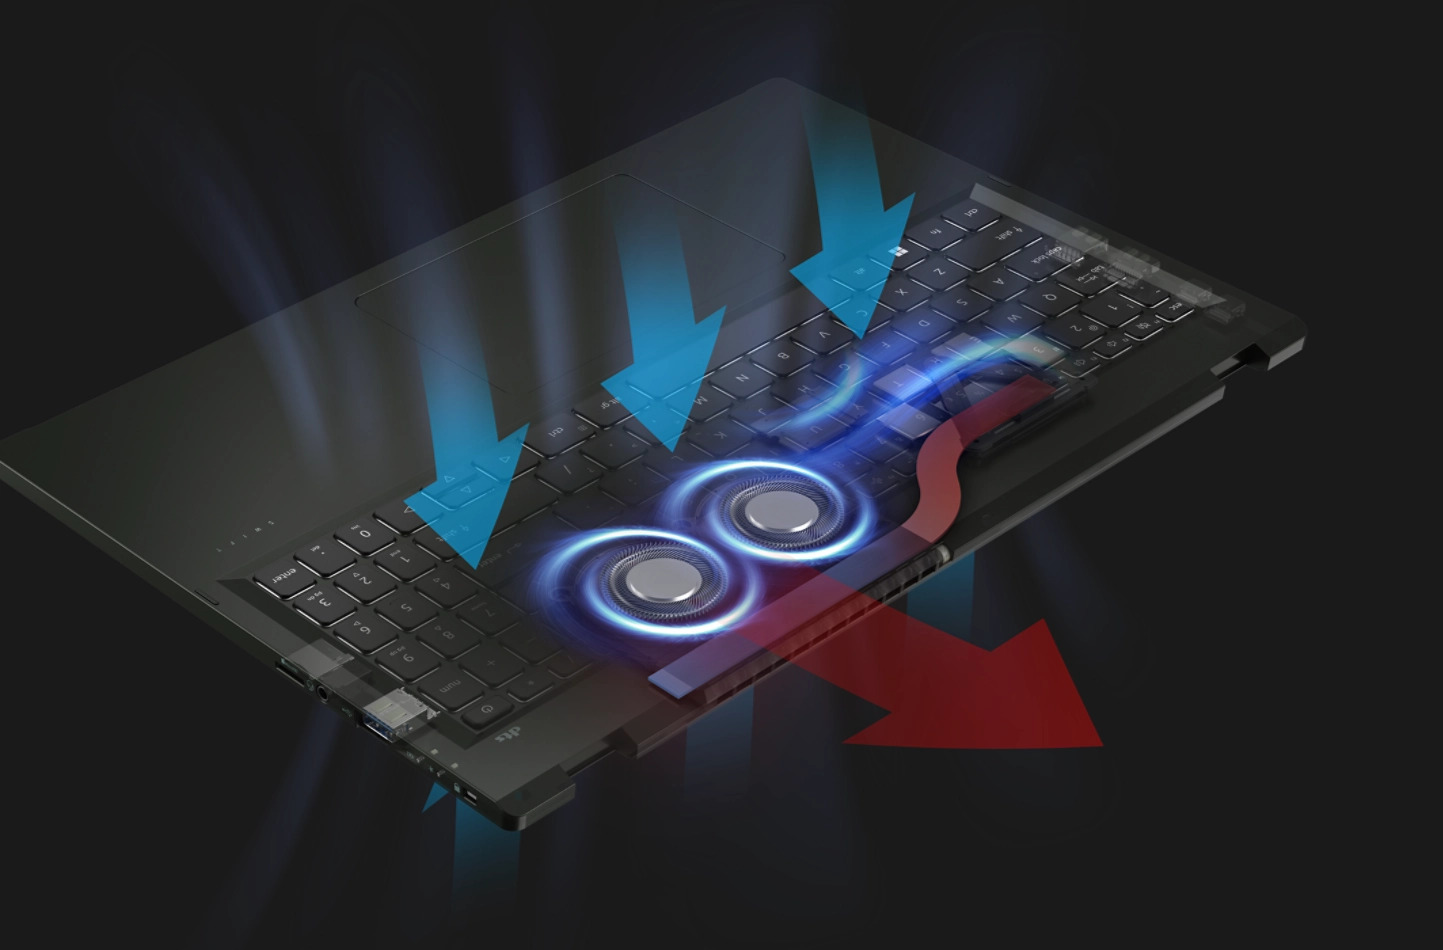 acer-laptop-swift-Edge-16-twinair-cooling-Static-KSP-Image-Right-Left-XL